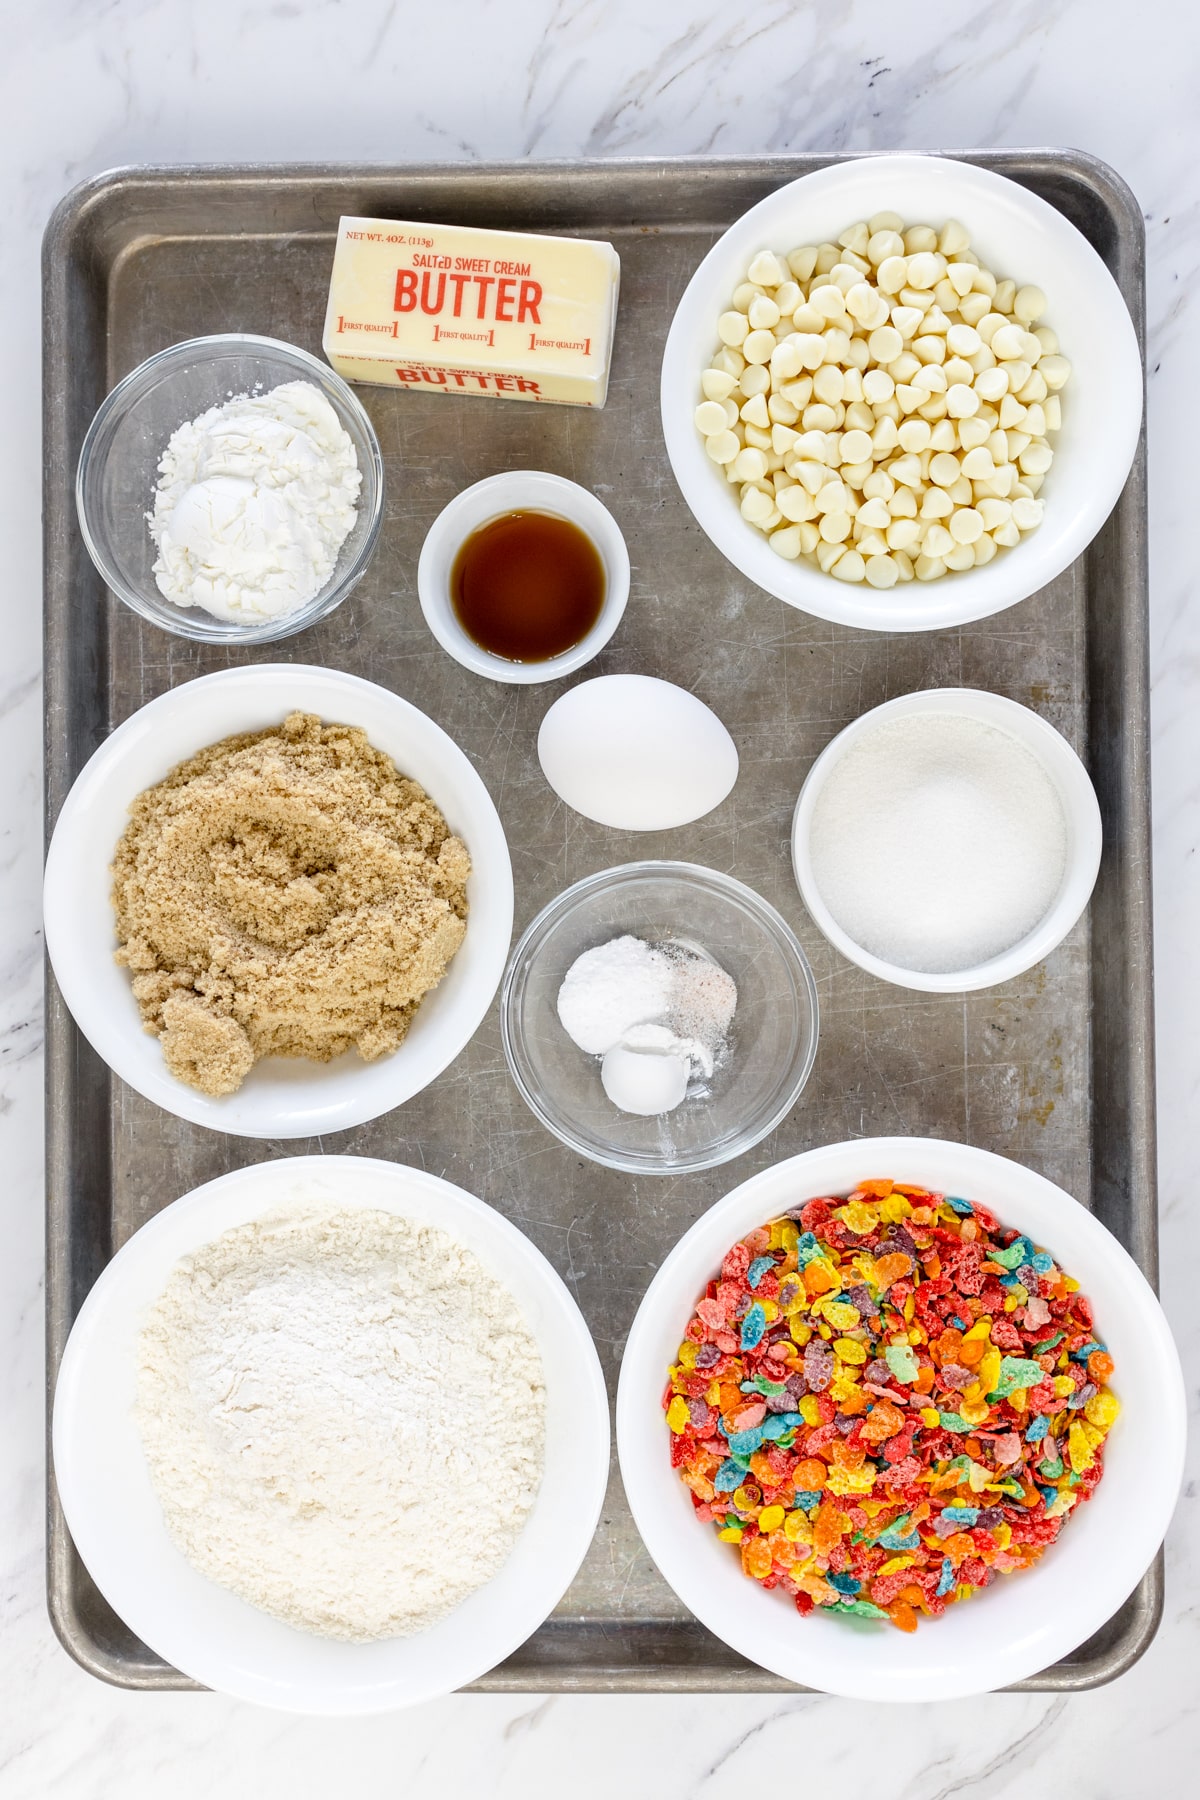 Top view of ingredients needed to make Fruity Pebble Cookies.